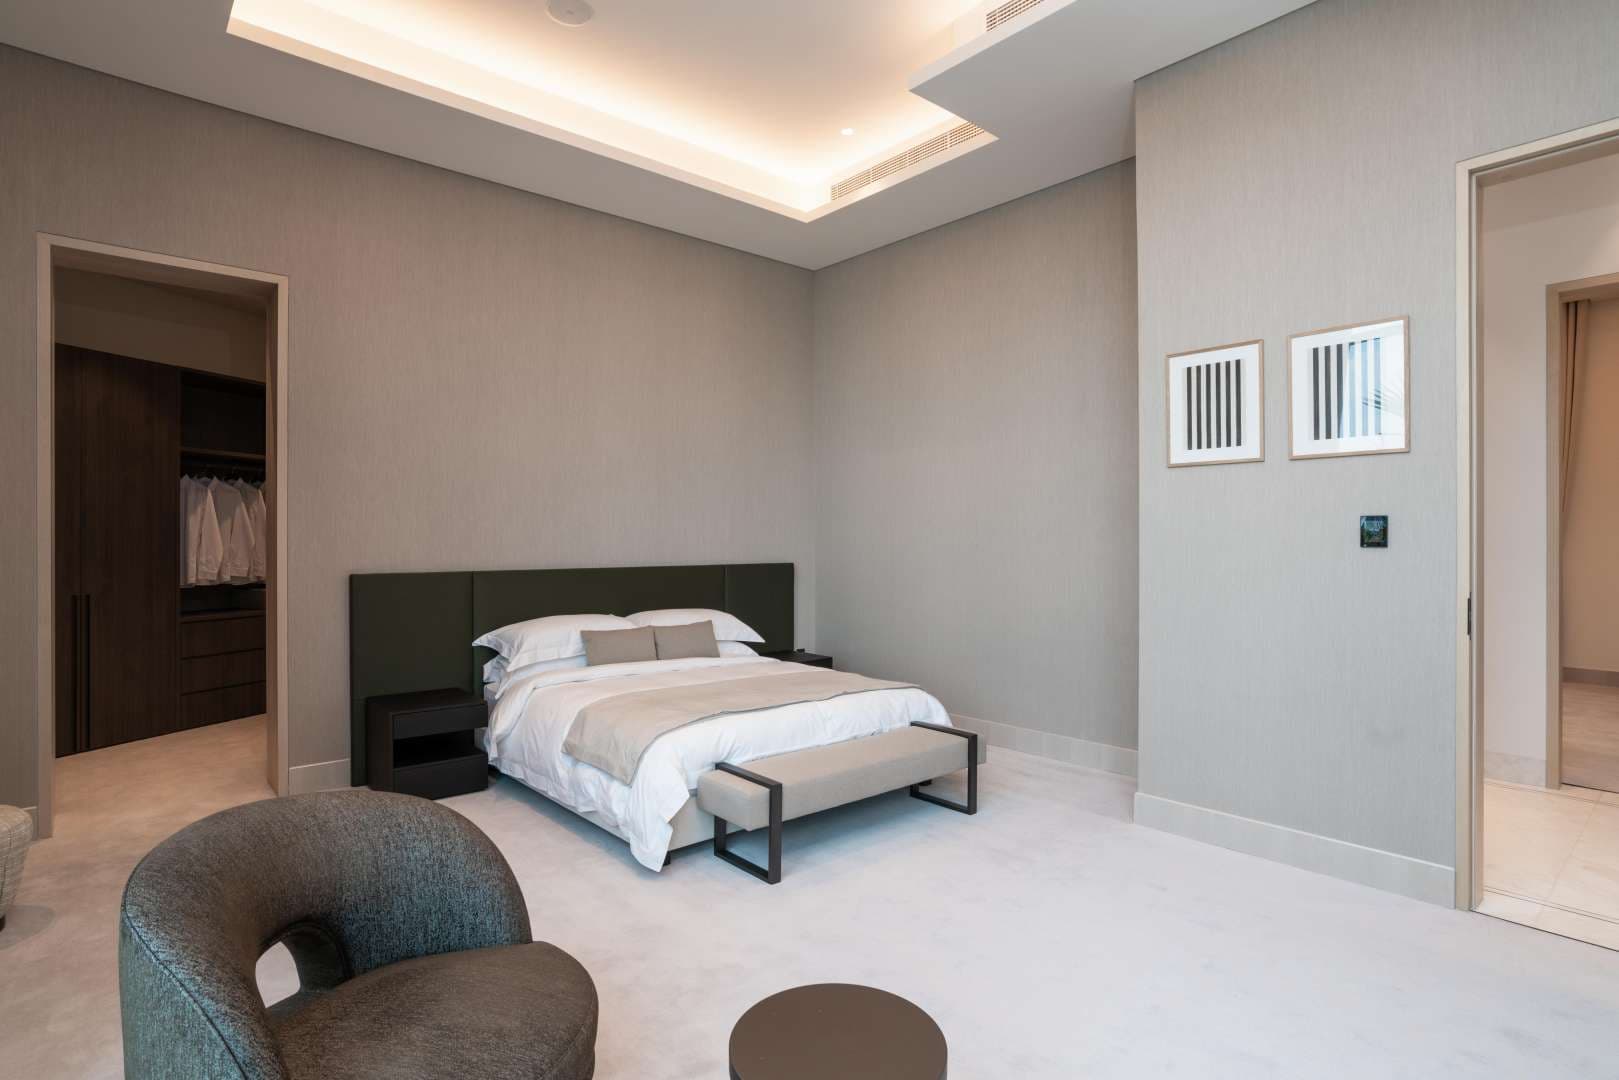 9 Bedroom Villa For Sale Dubai Hills View Lp05164 Ababd66e3600f80.jpg